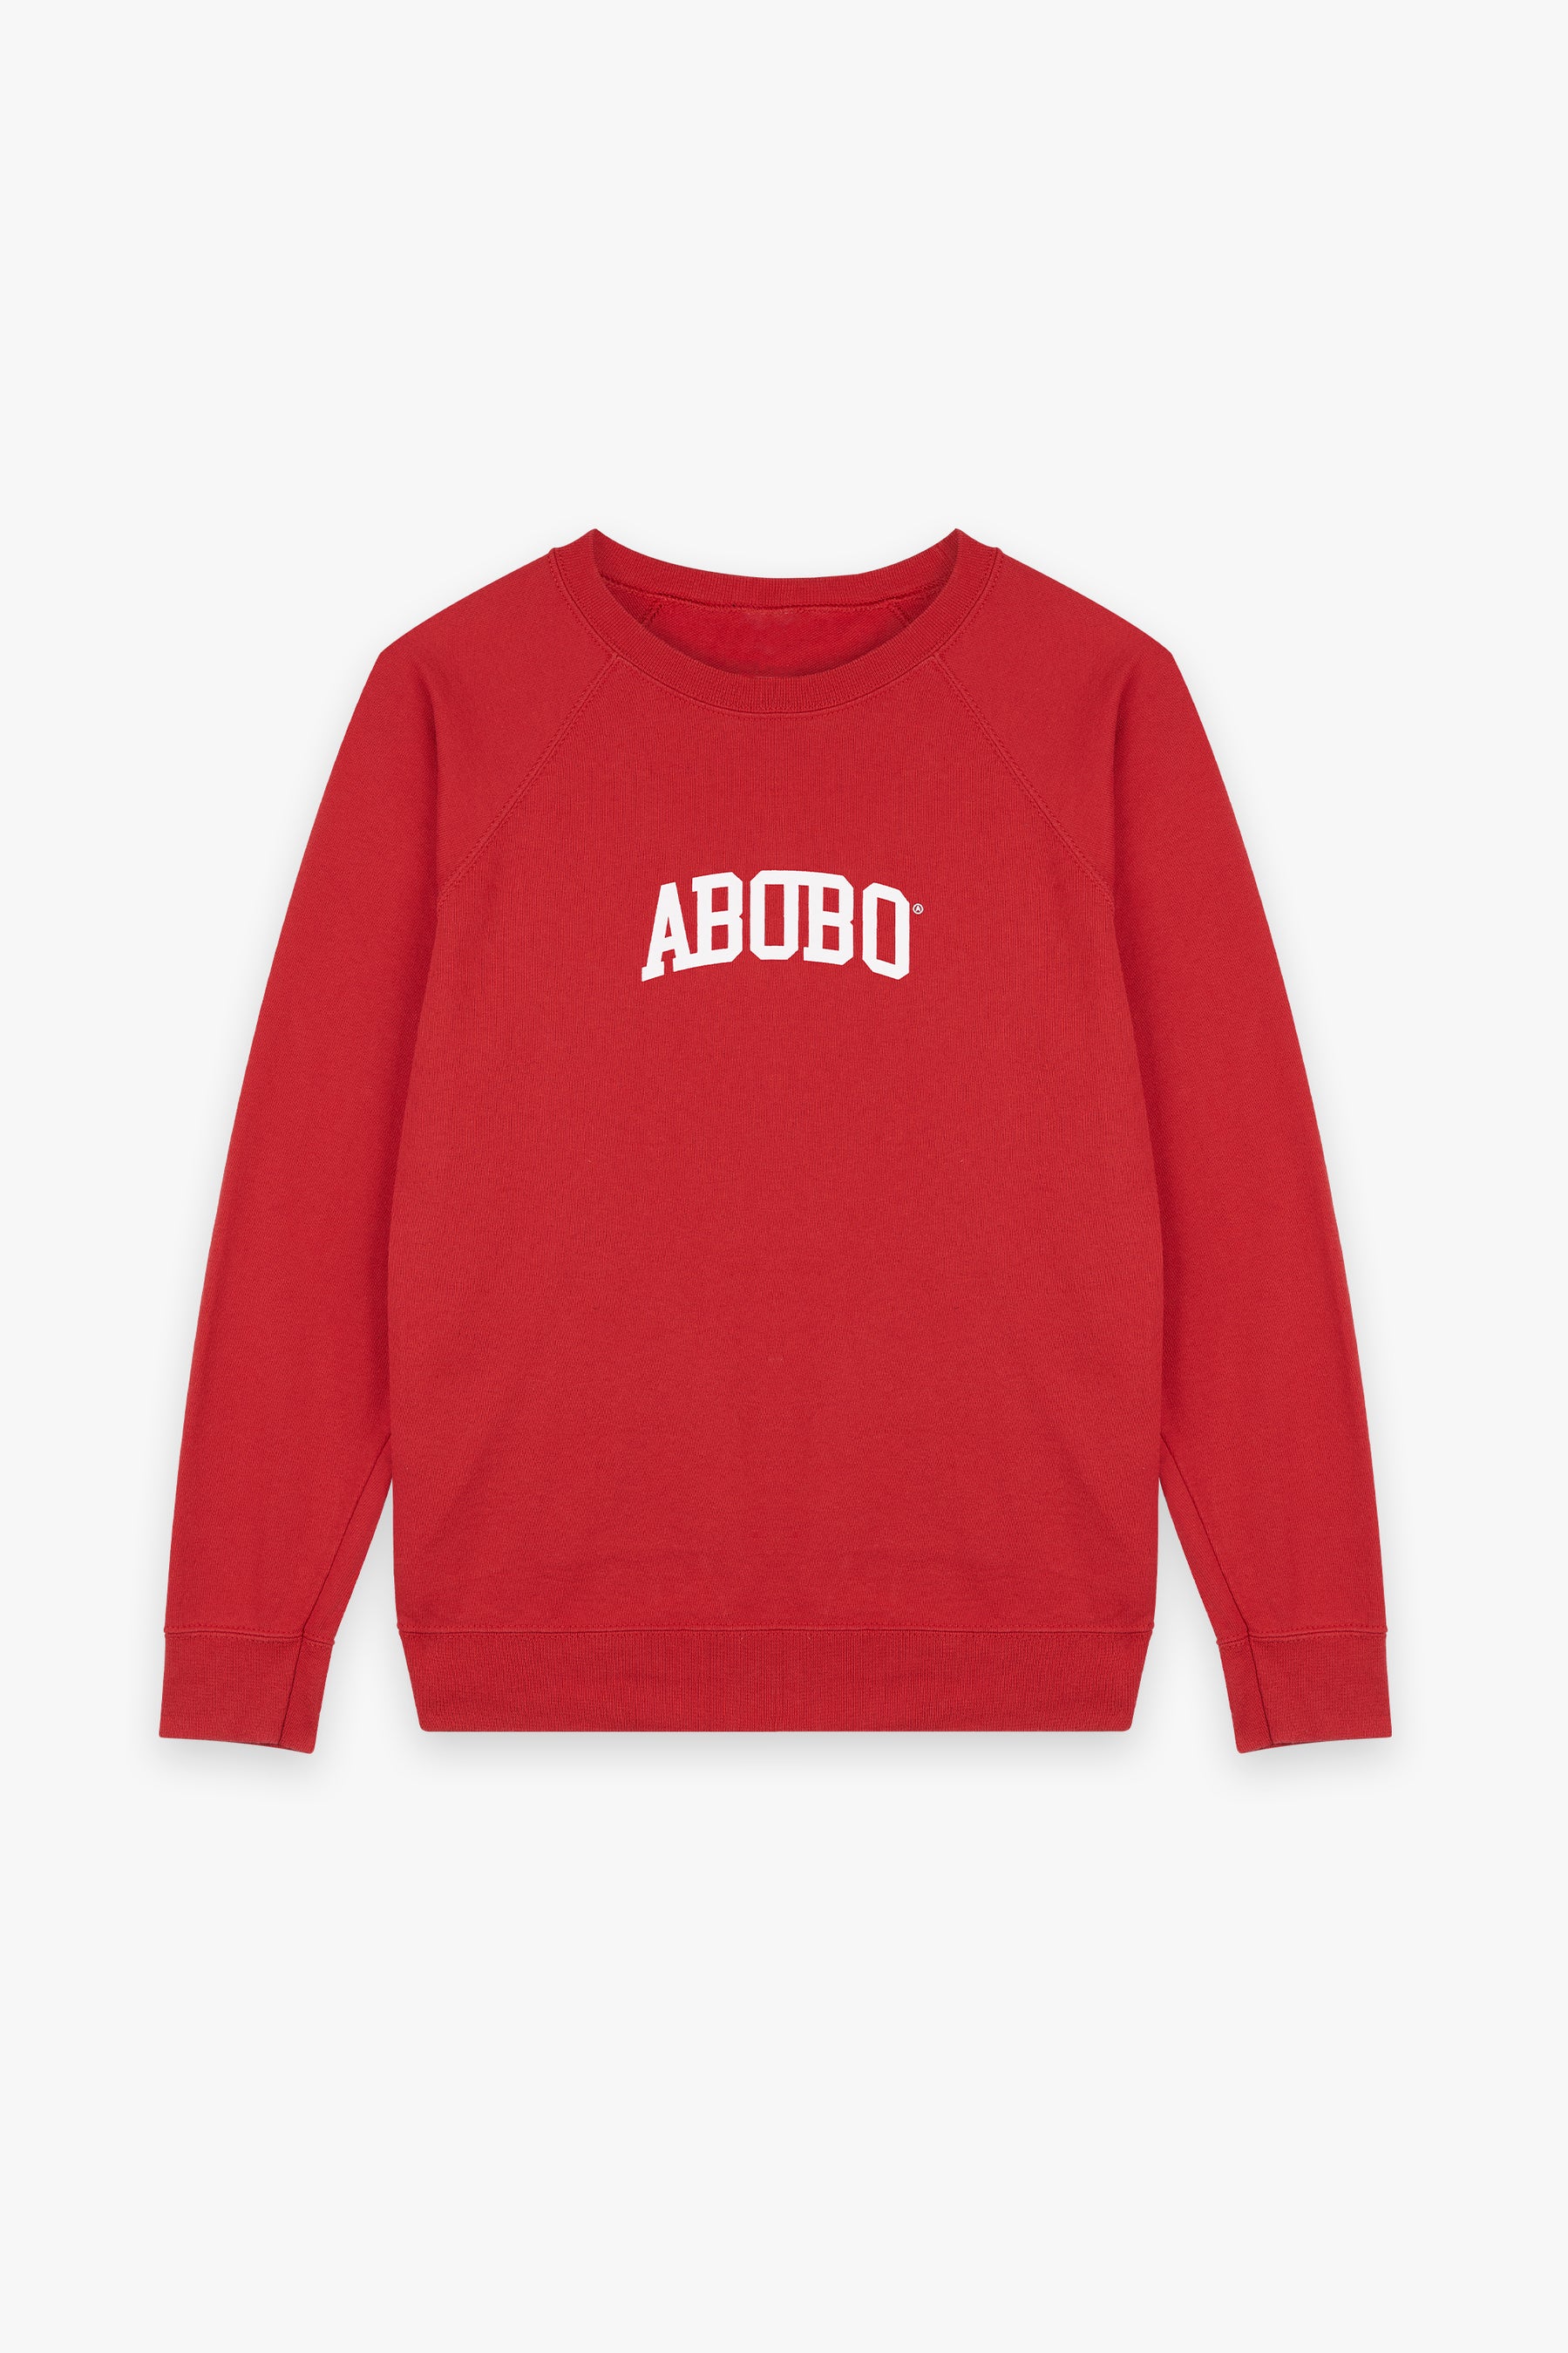 Abobo Raglan Sleeve Sweatshirt Red